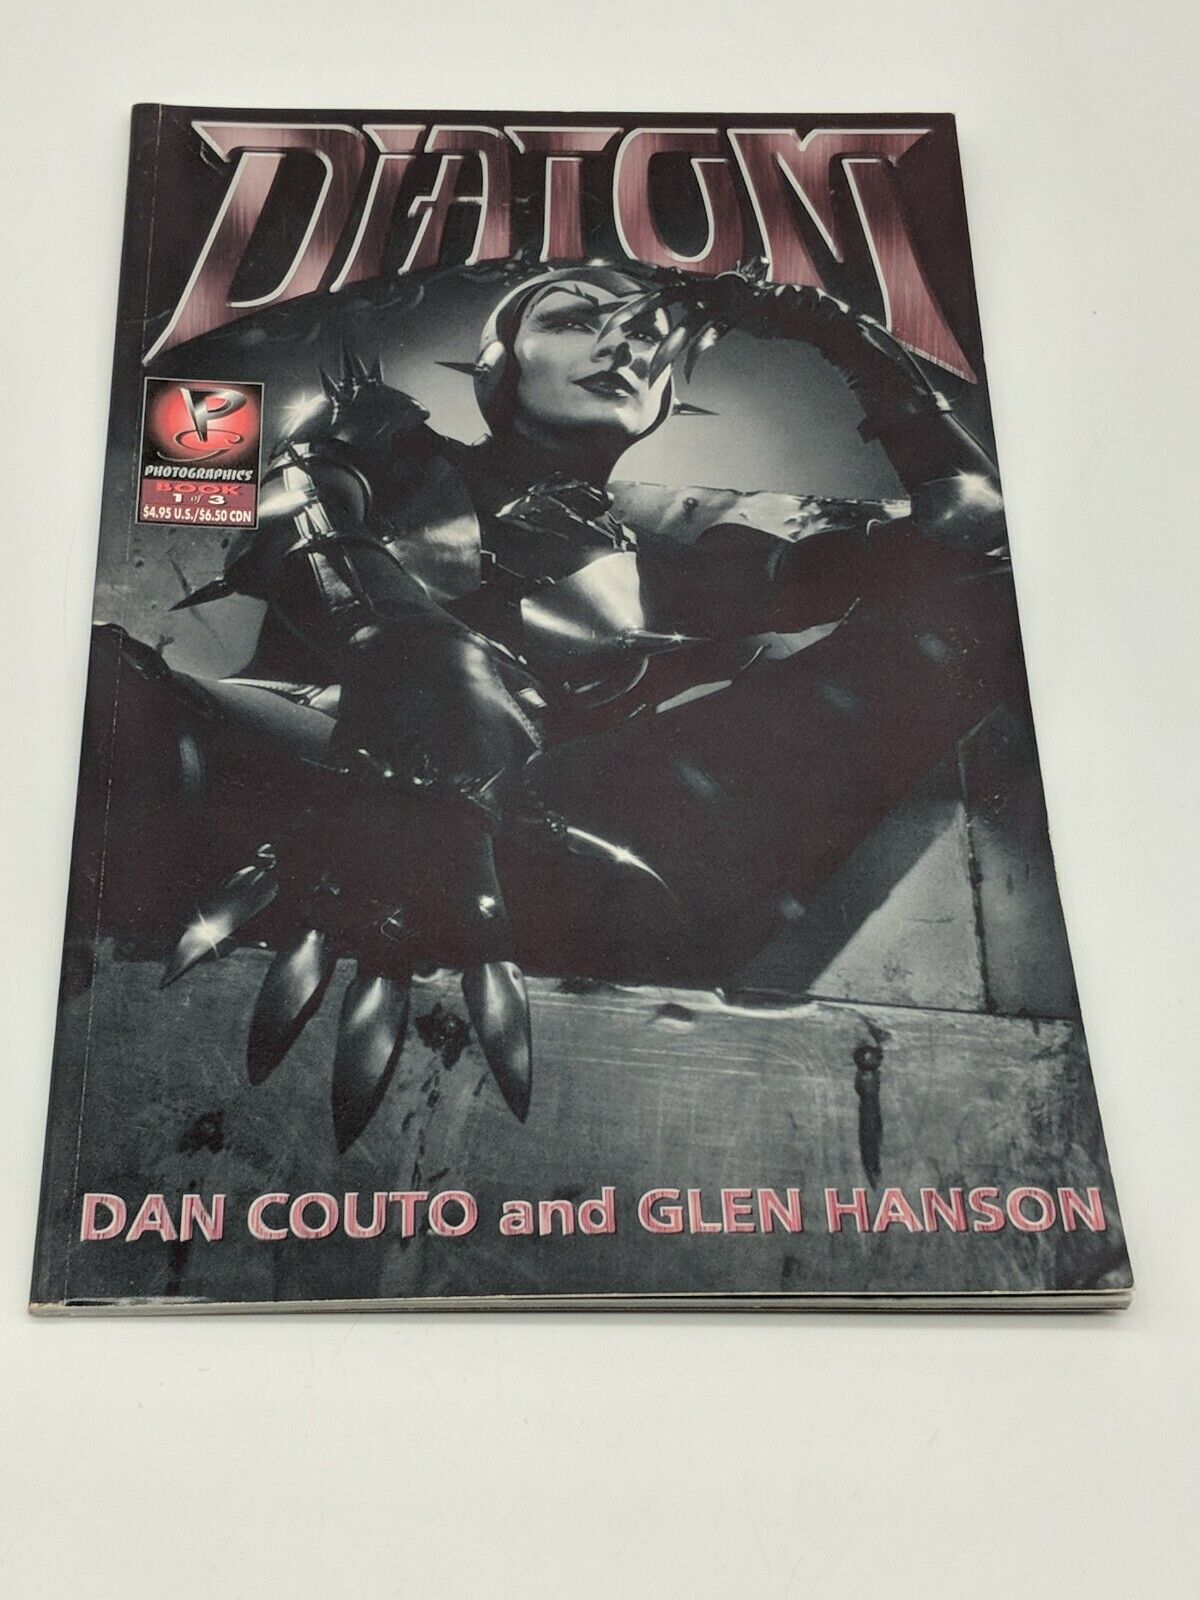 DIATOM #1 Photographics, Dan Couto, Glen Hanson, 1995